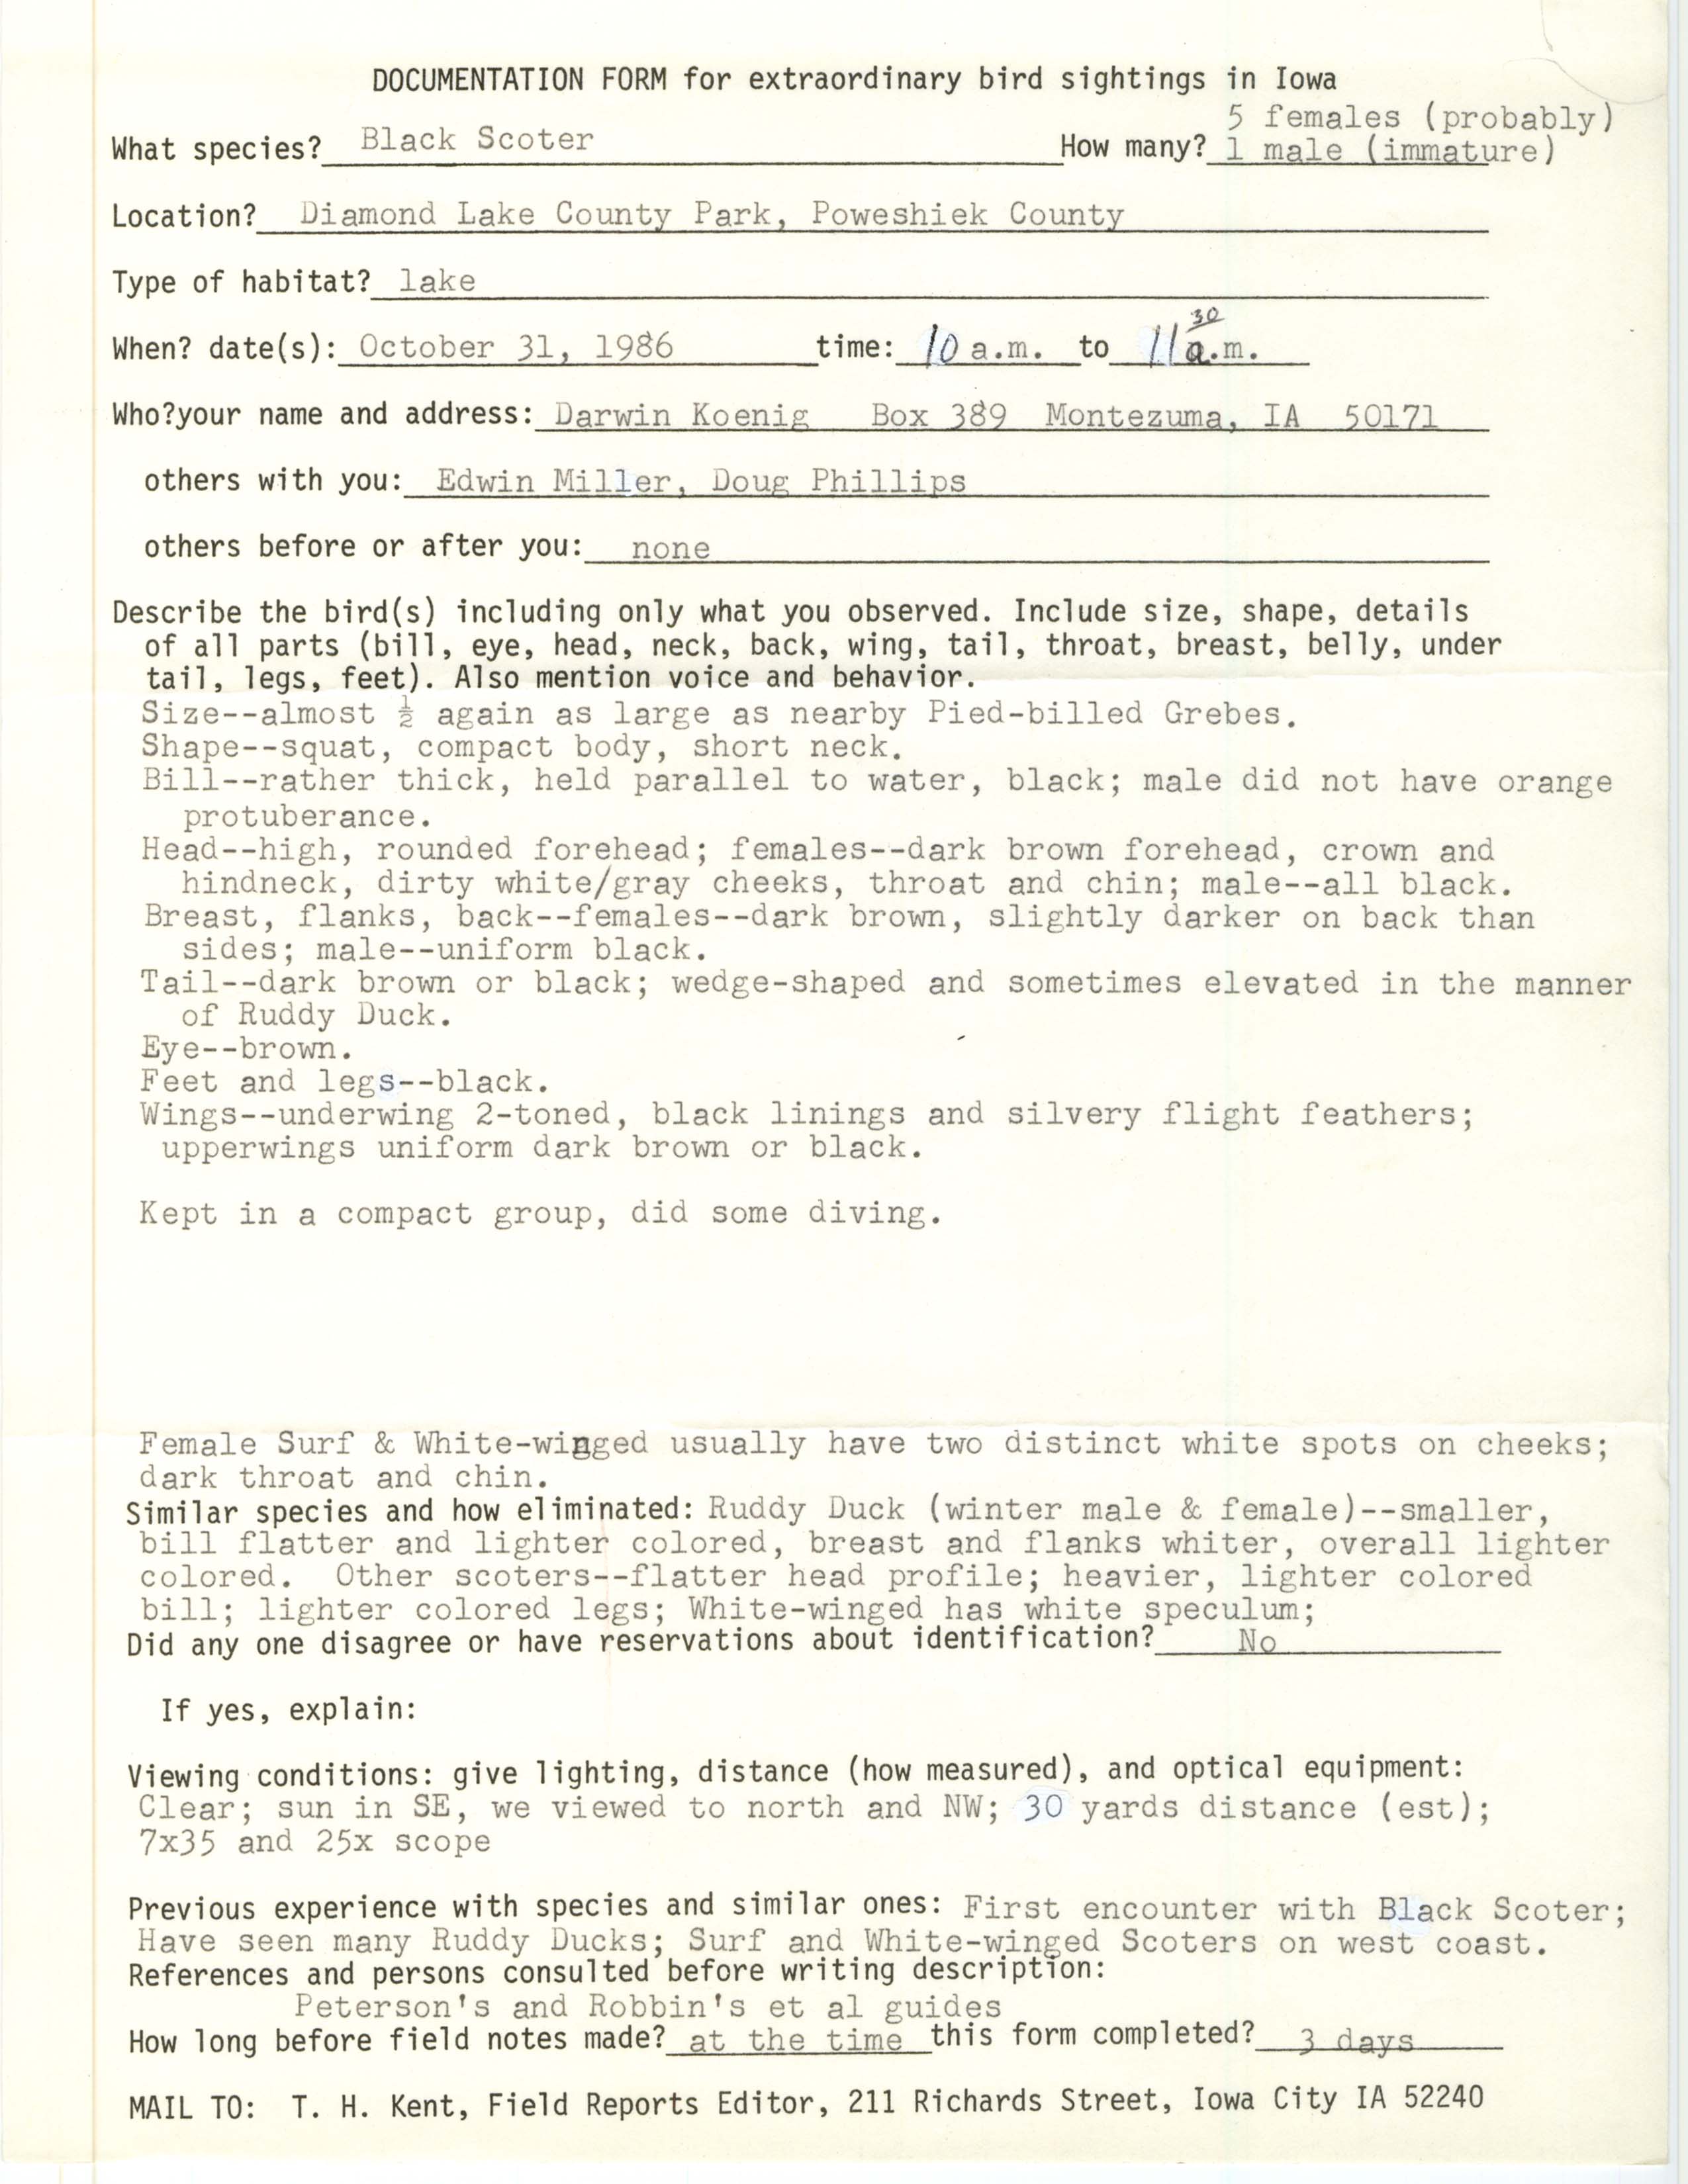 Rare bird documentation form for Black Scoter at Diamond Lake County Park, 1986